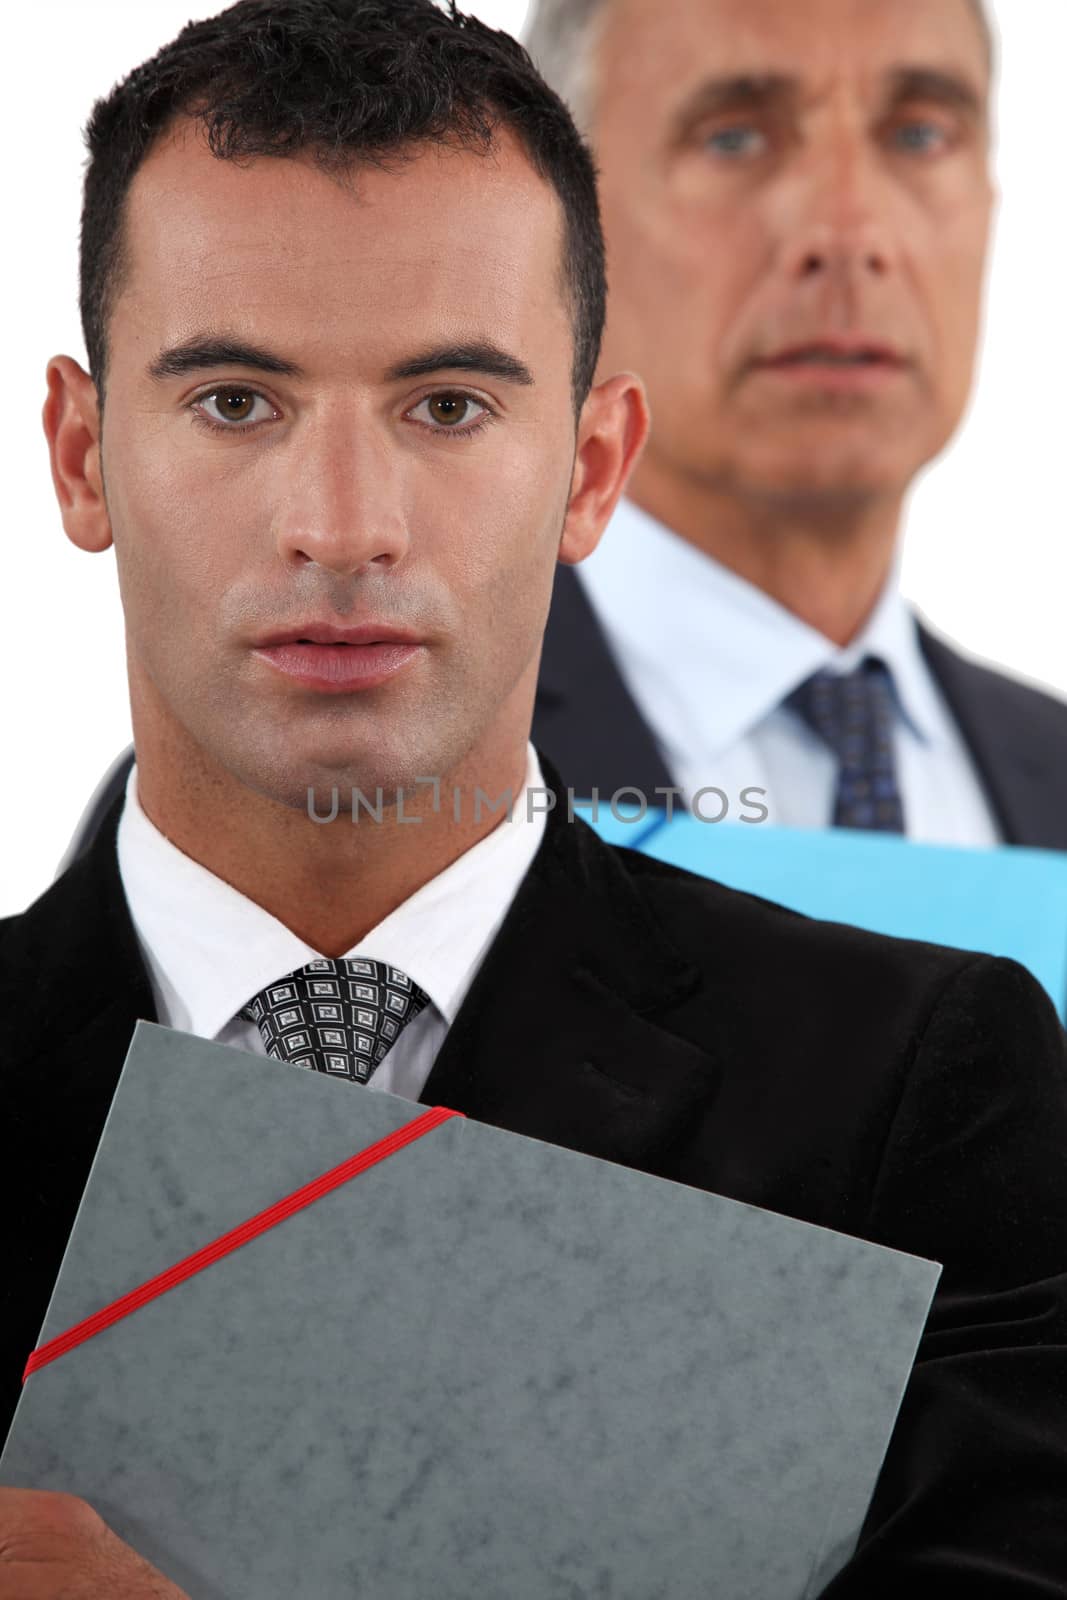 Businessmen holding documents